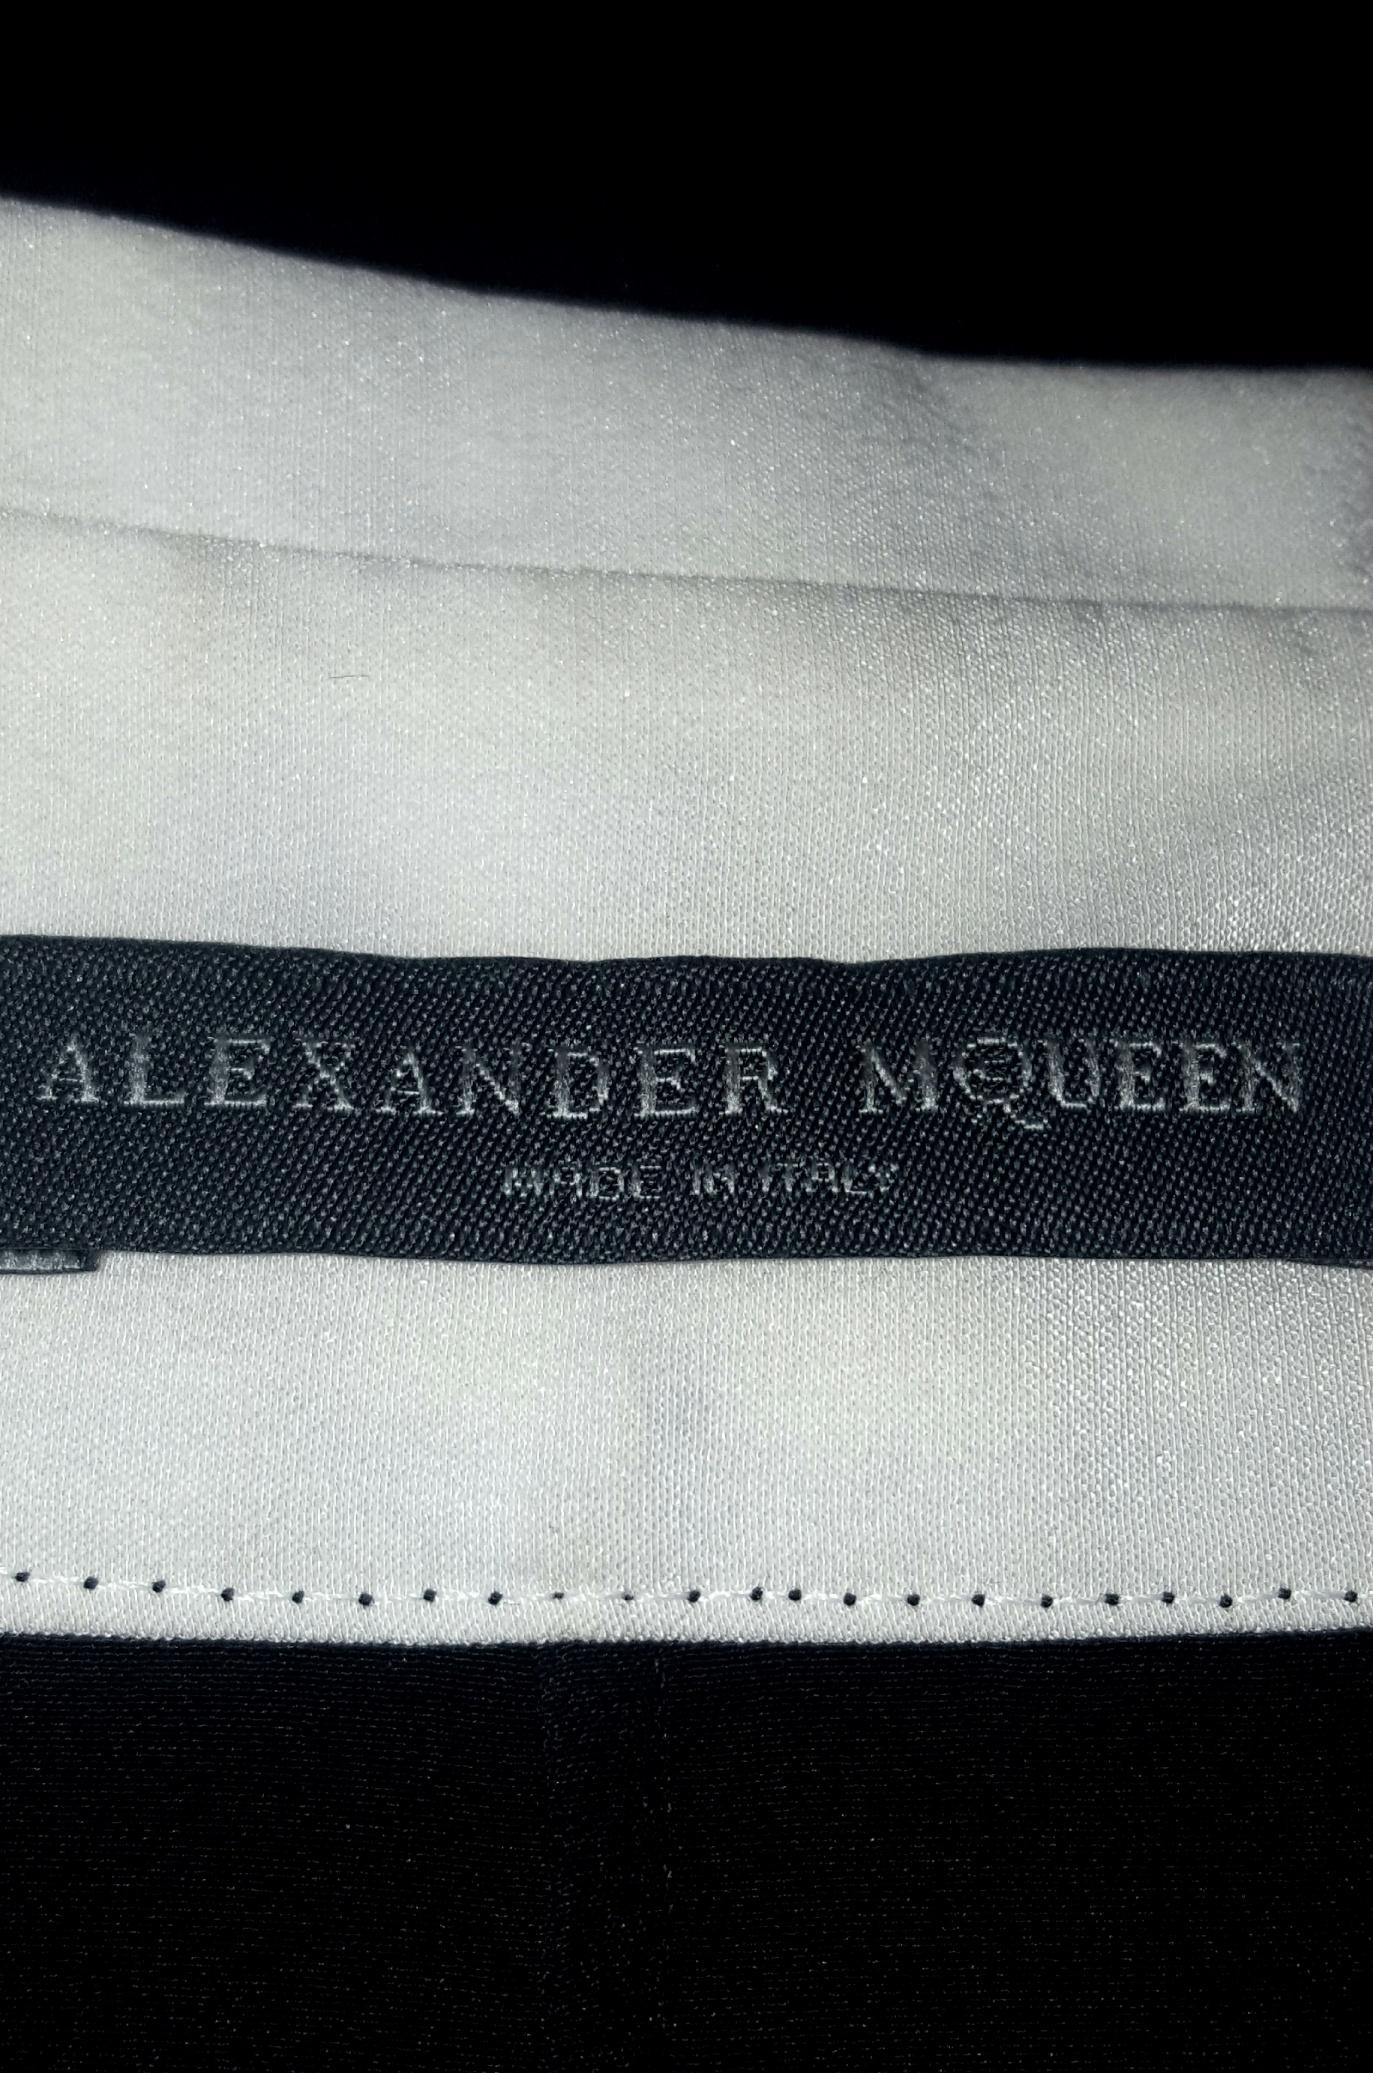 Black Alexander McQueen Ebony & Ivory Silk Shirt Dress 44 EU For Sale